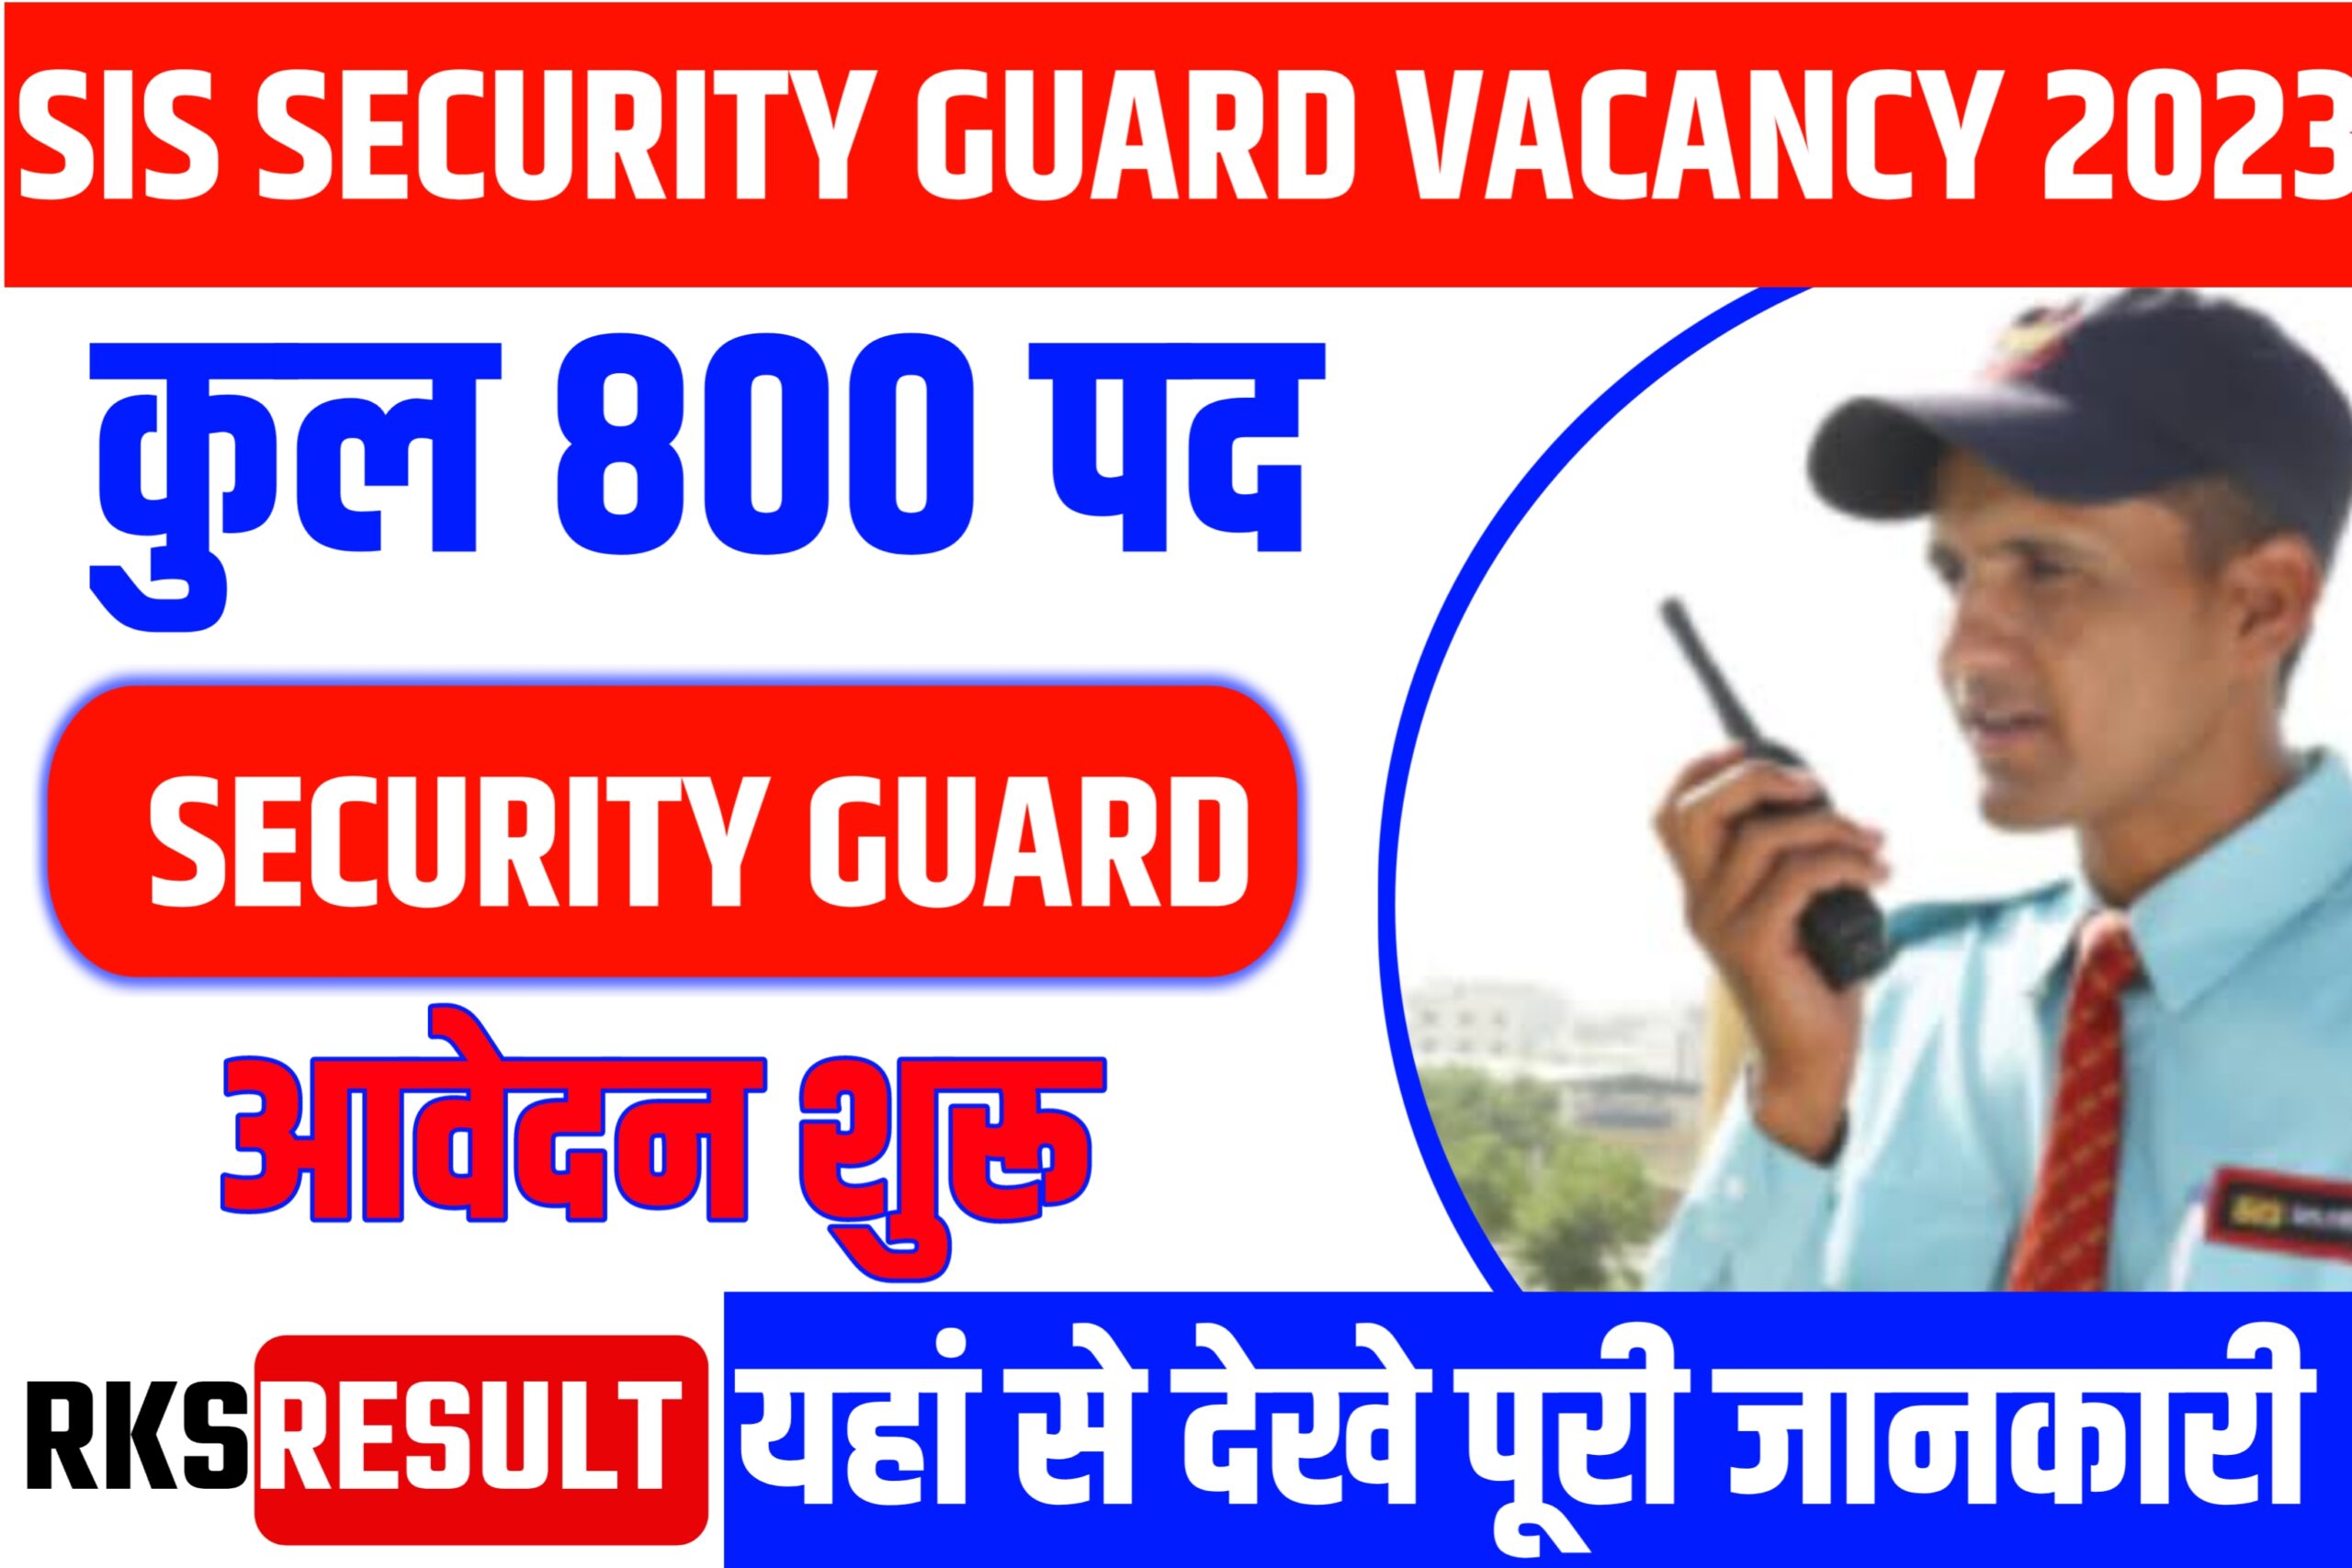 SIS Security Guard Vacancy 2023